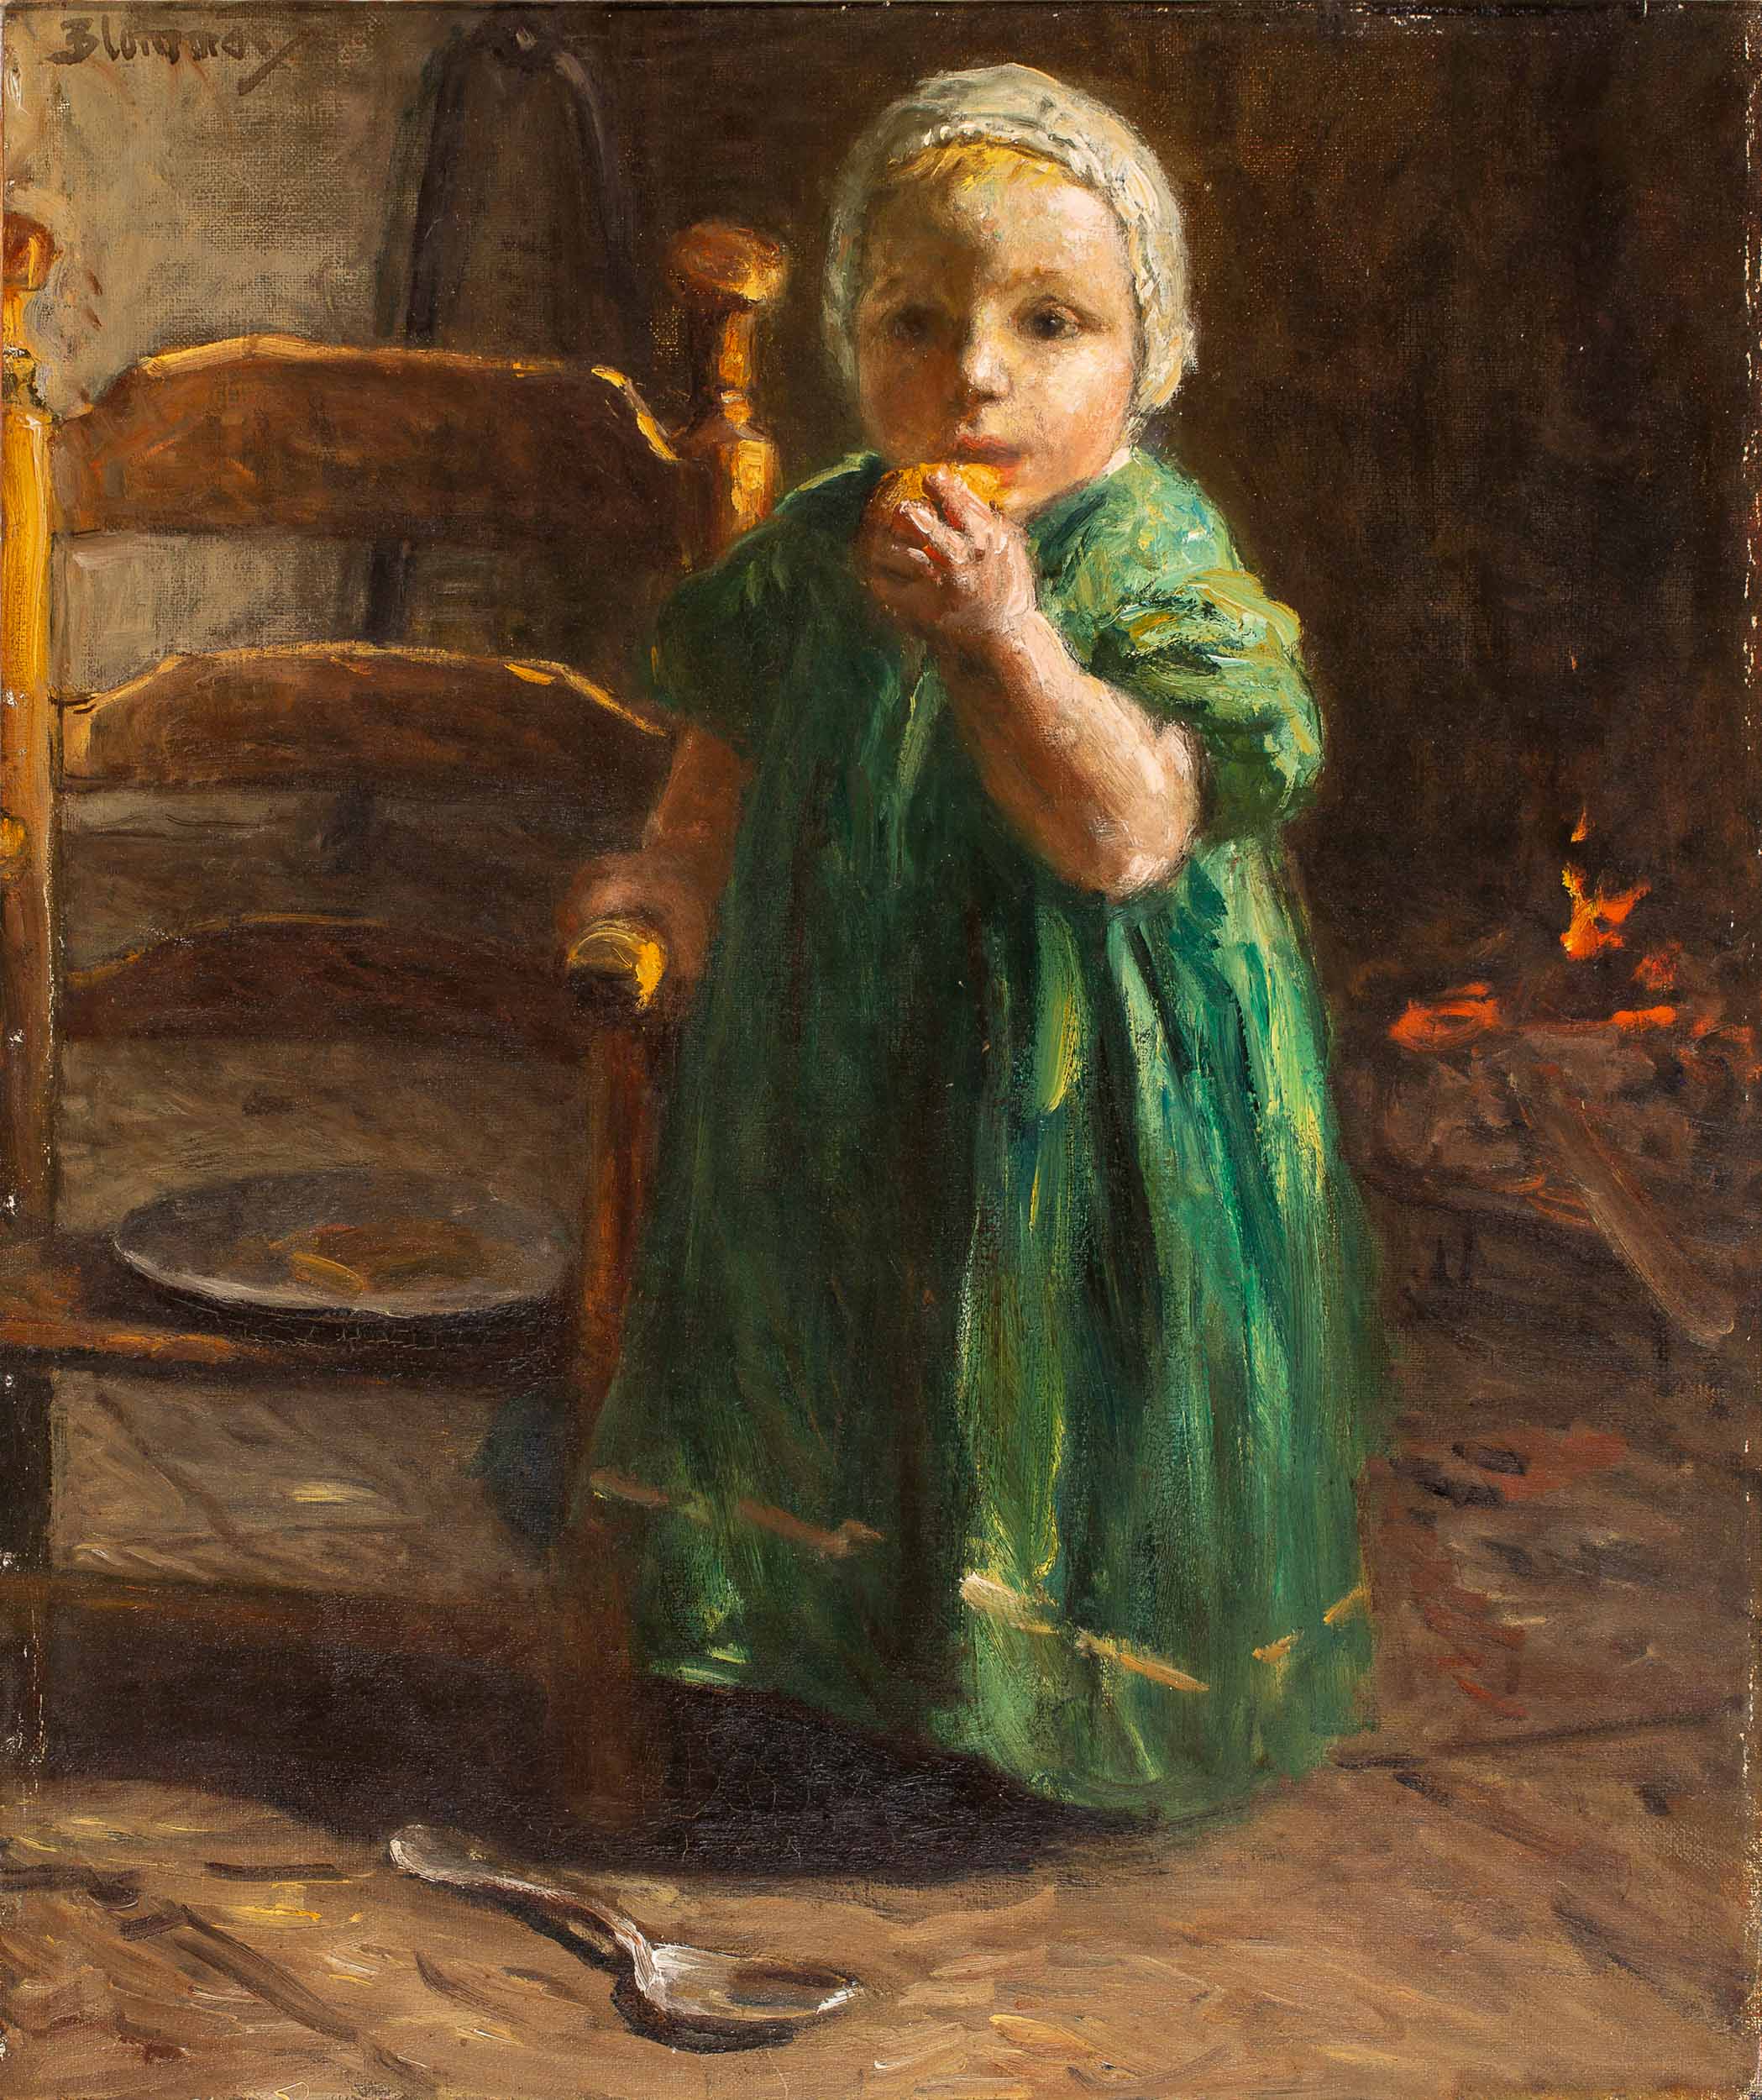 Little girl in green dress (c. 1895)